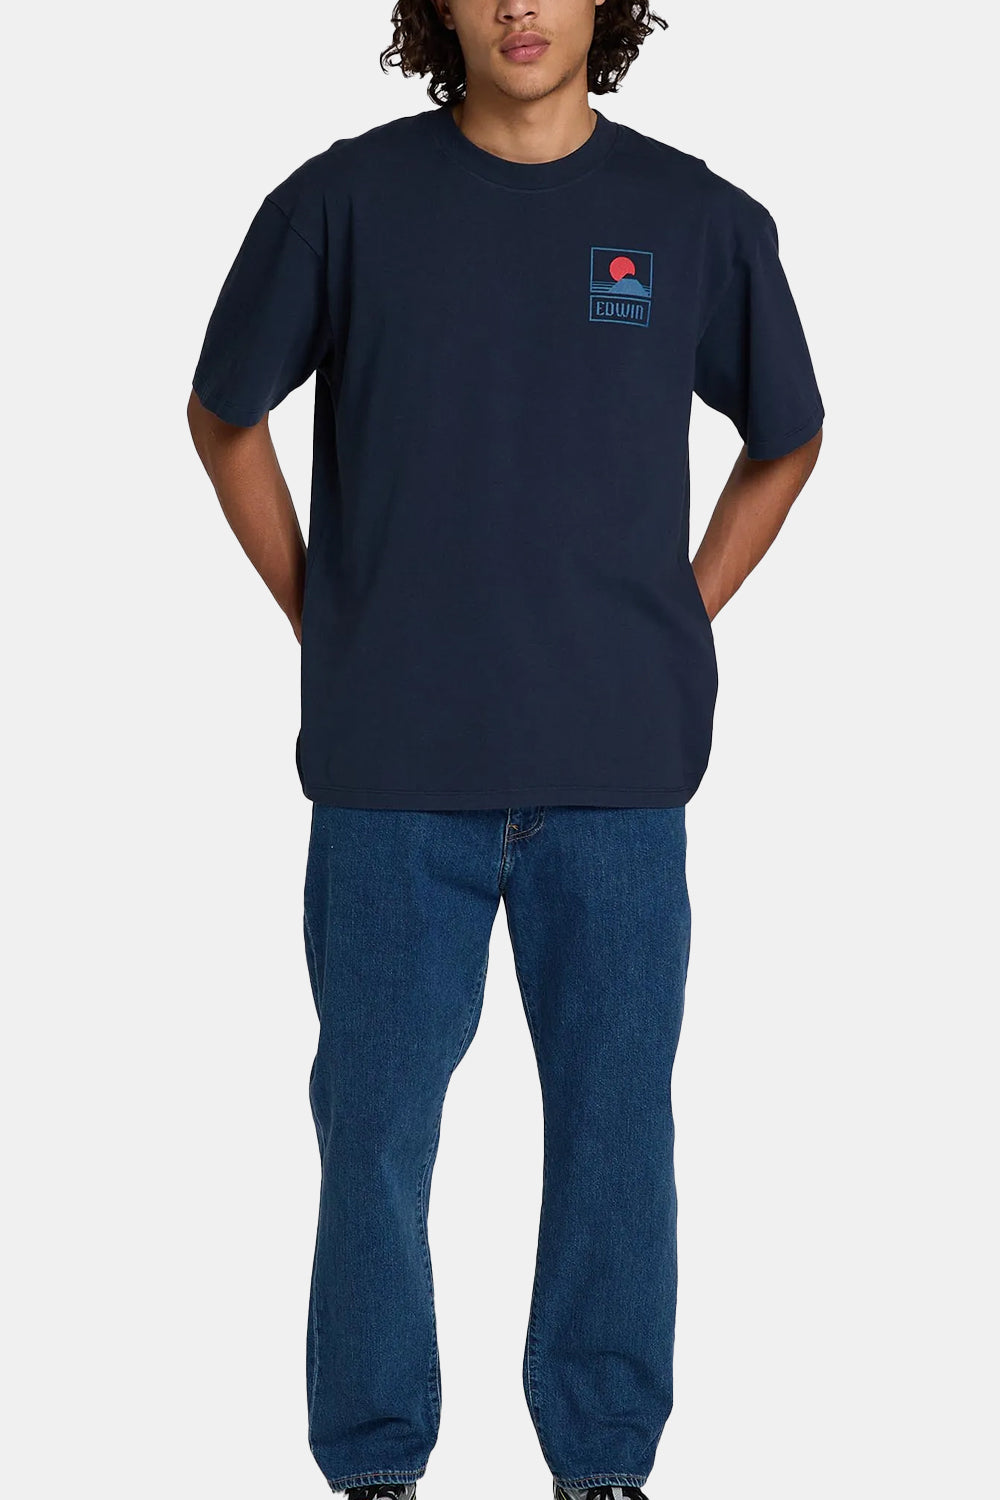 Edwin Sunset On Mount Fuji T-Shirt (Navy Blazer)